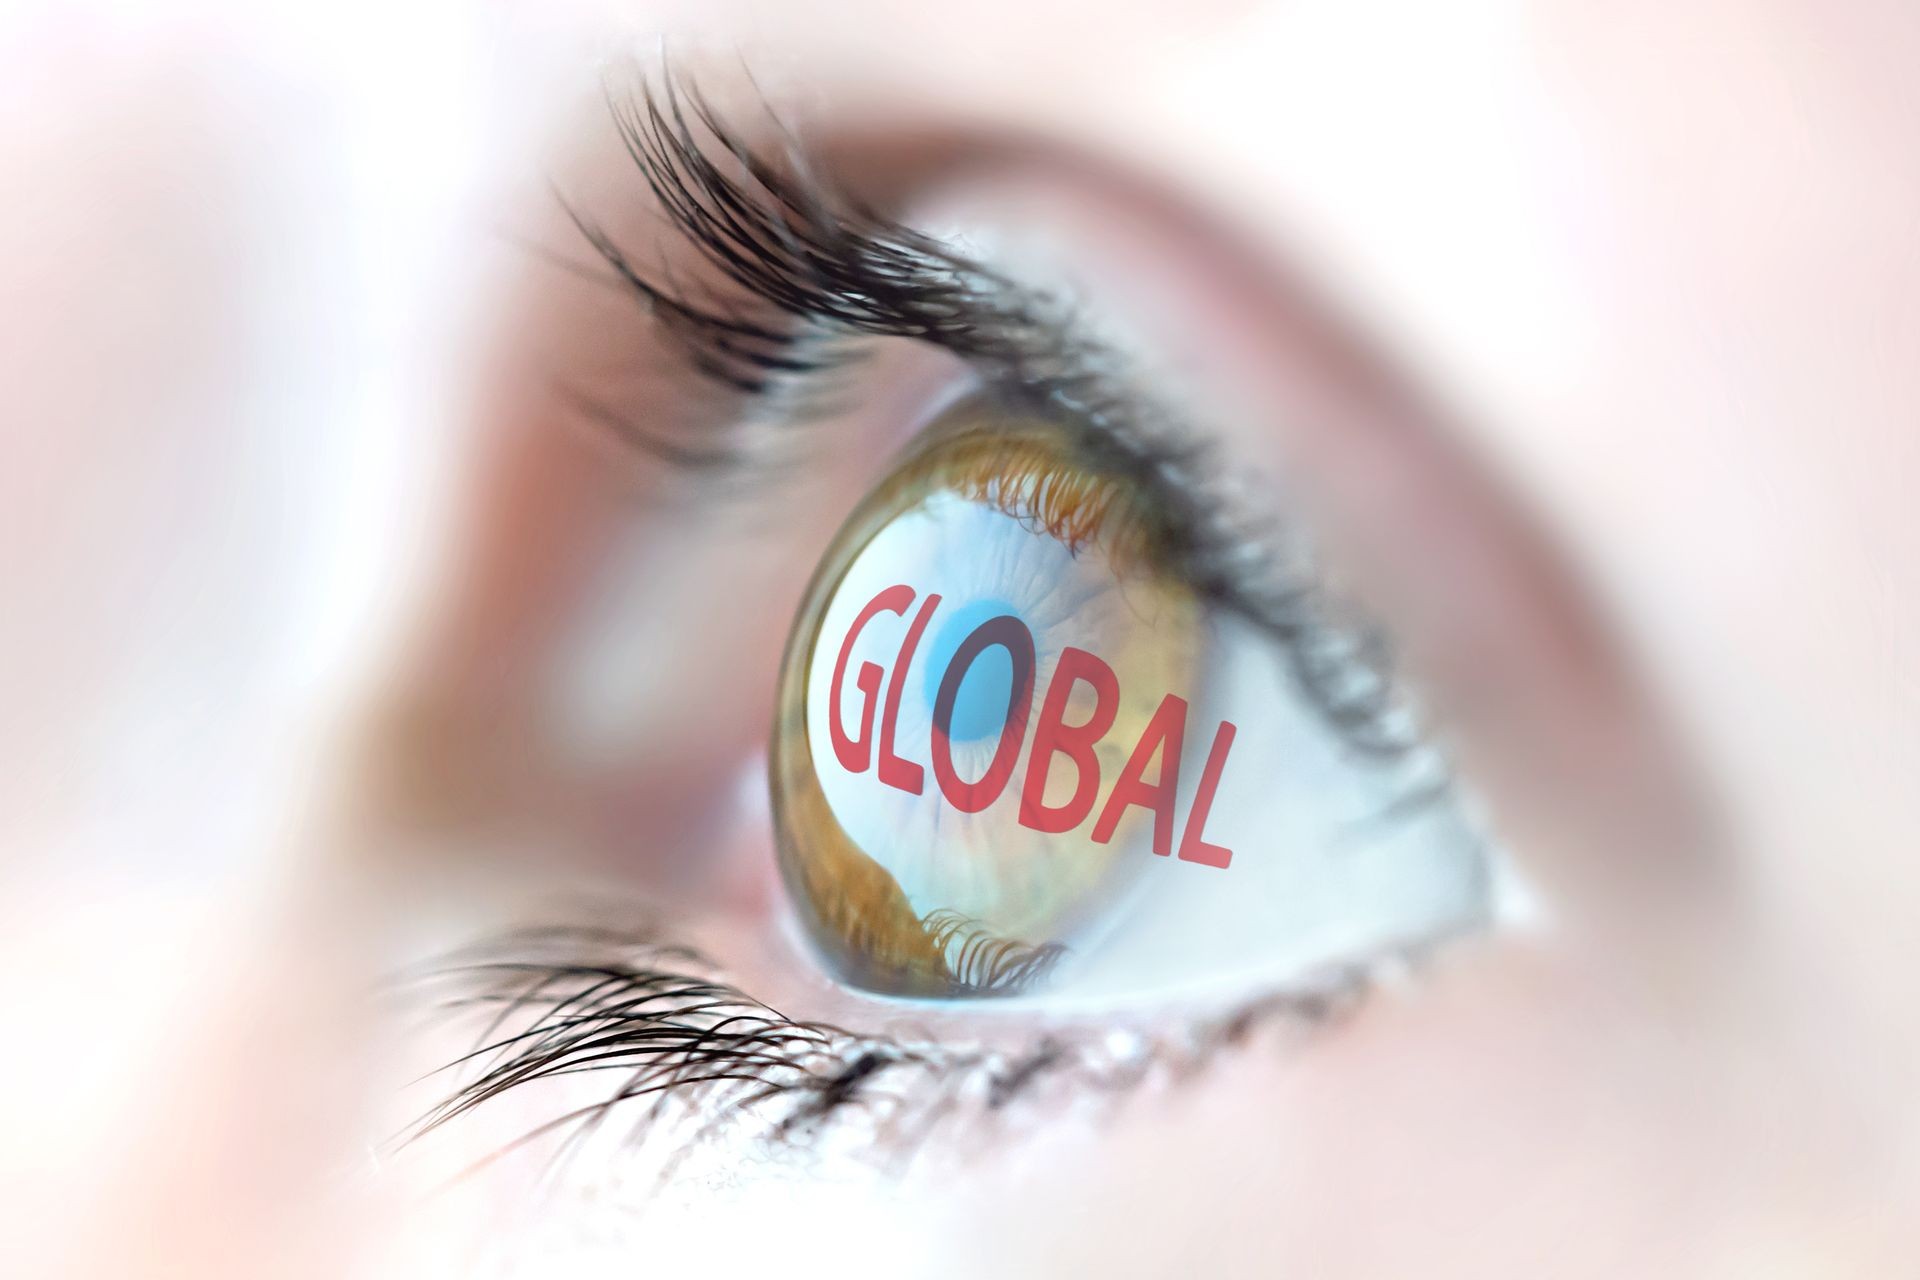 Global reflection in eye.